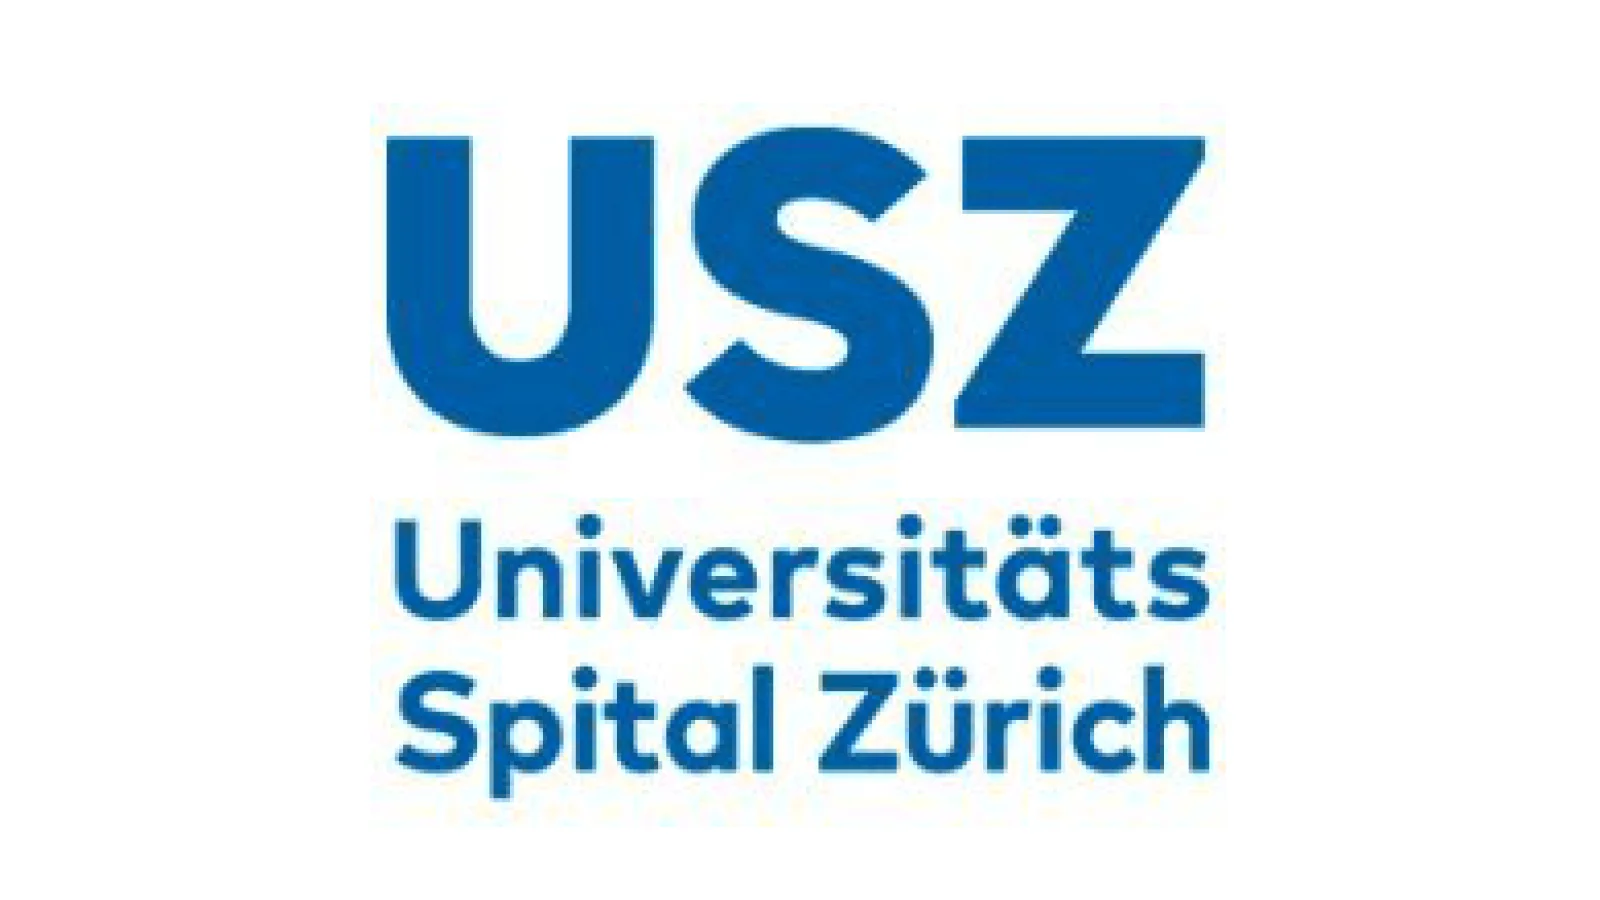 Logo USZ